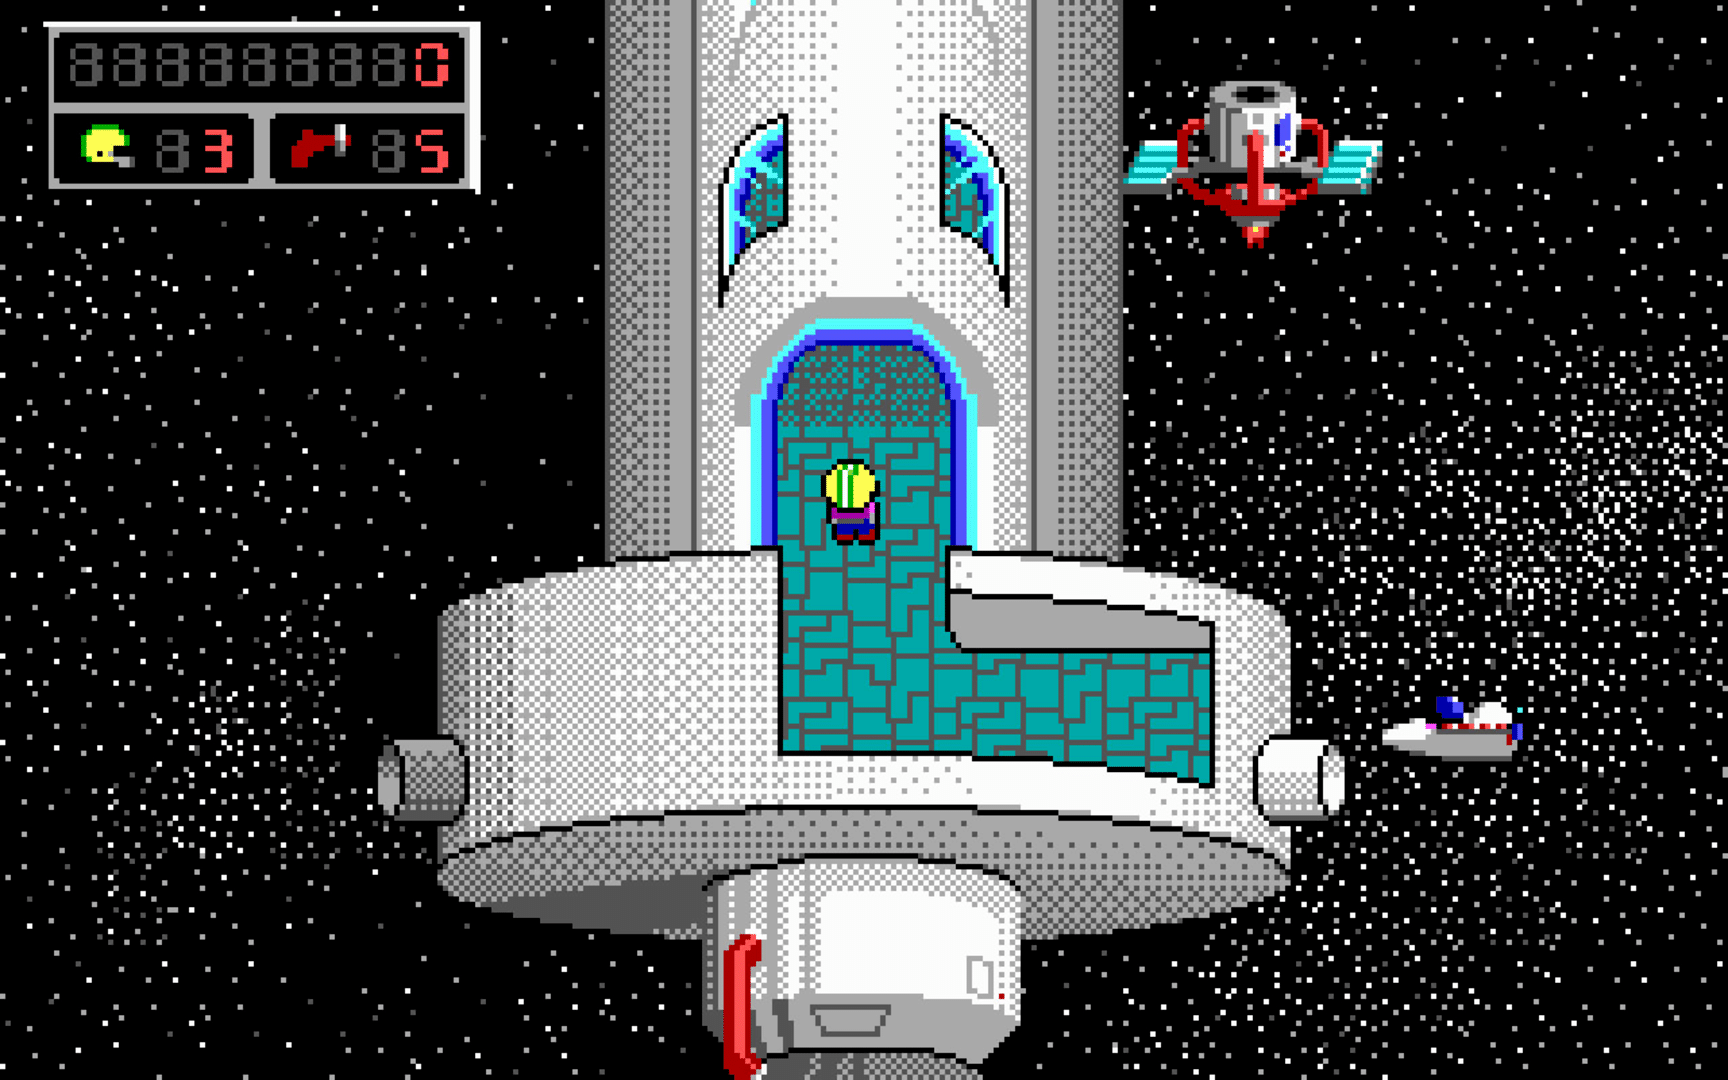 Commander Keen in Goodbye, Galaxy!: The Armageddon Machine screenshot